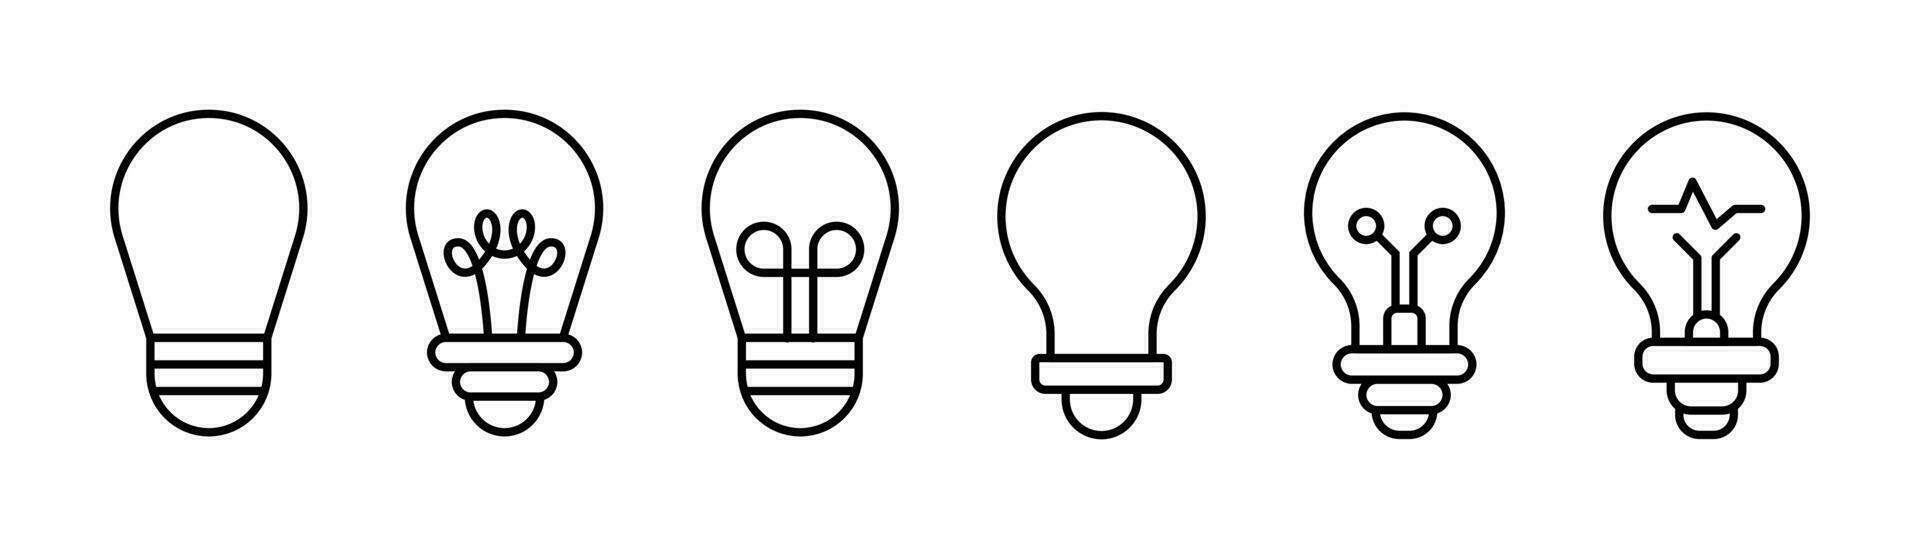 Lightbulb icon set. Outline lamp icon. Idea symbol. Light bulb sign in line. Lamp vector illustration. Linear lightbulb icon. Stock vector illustration.